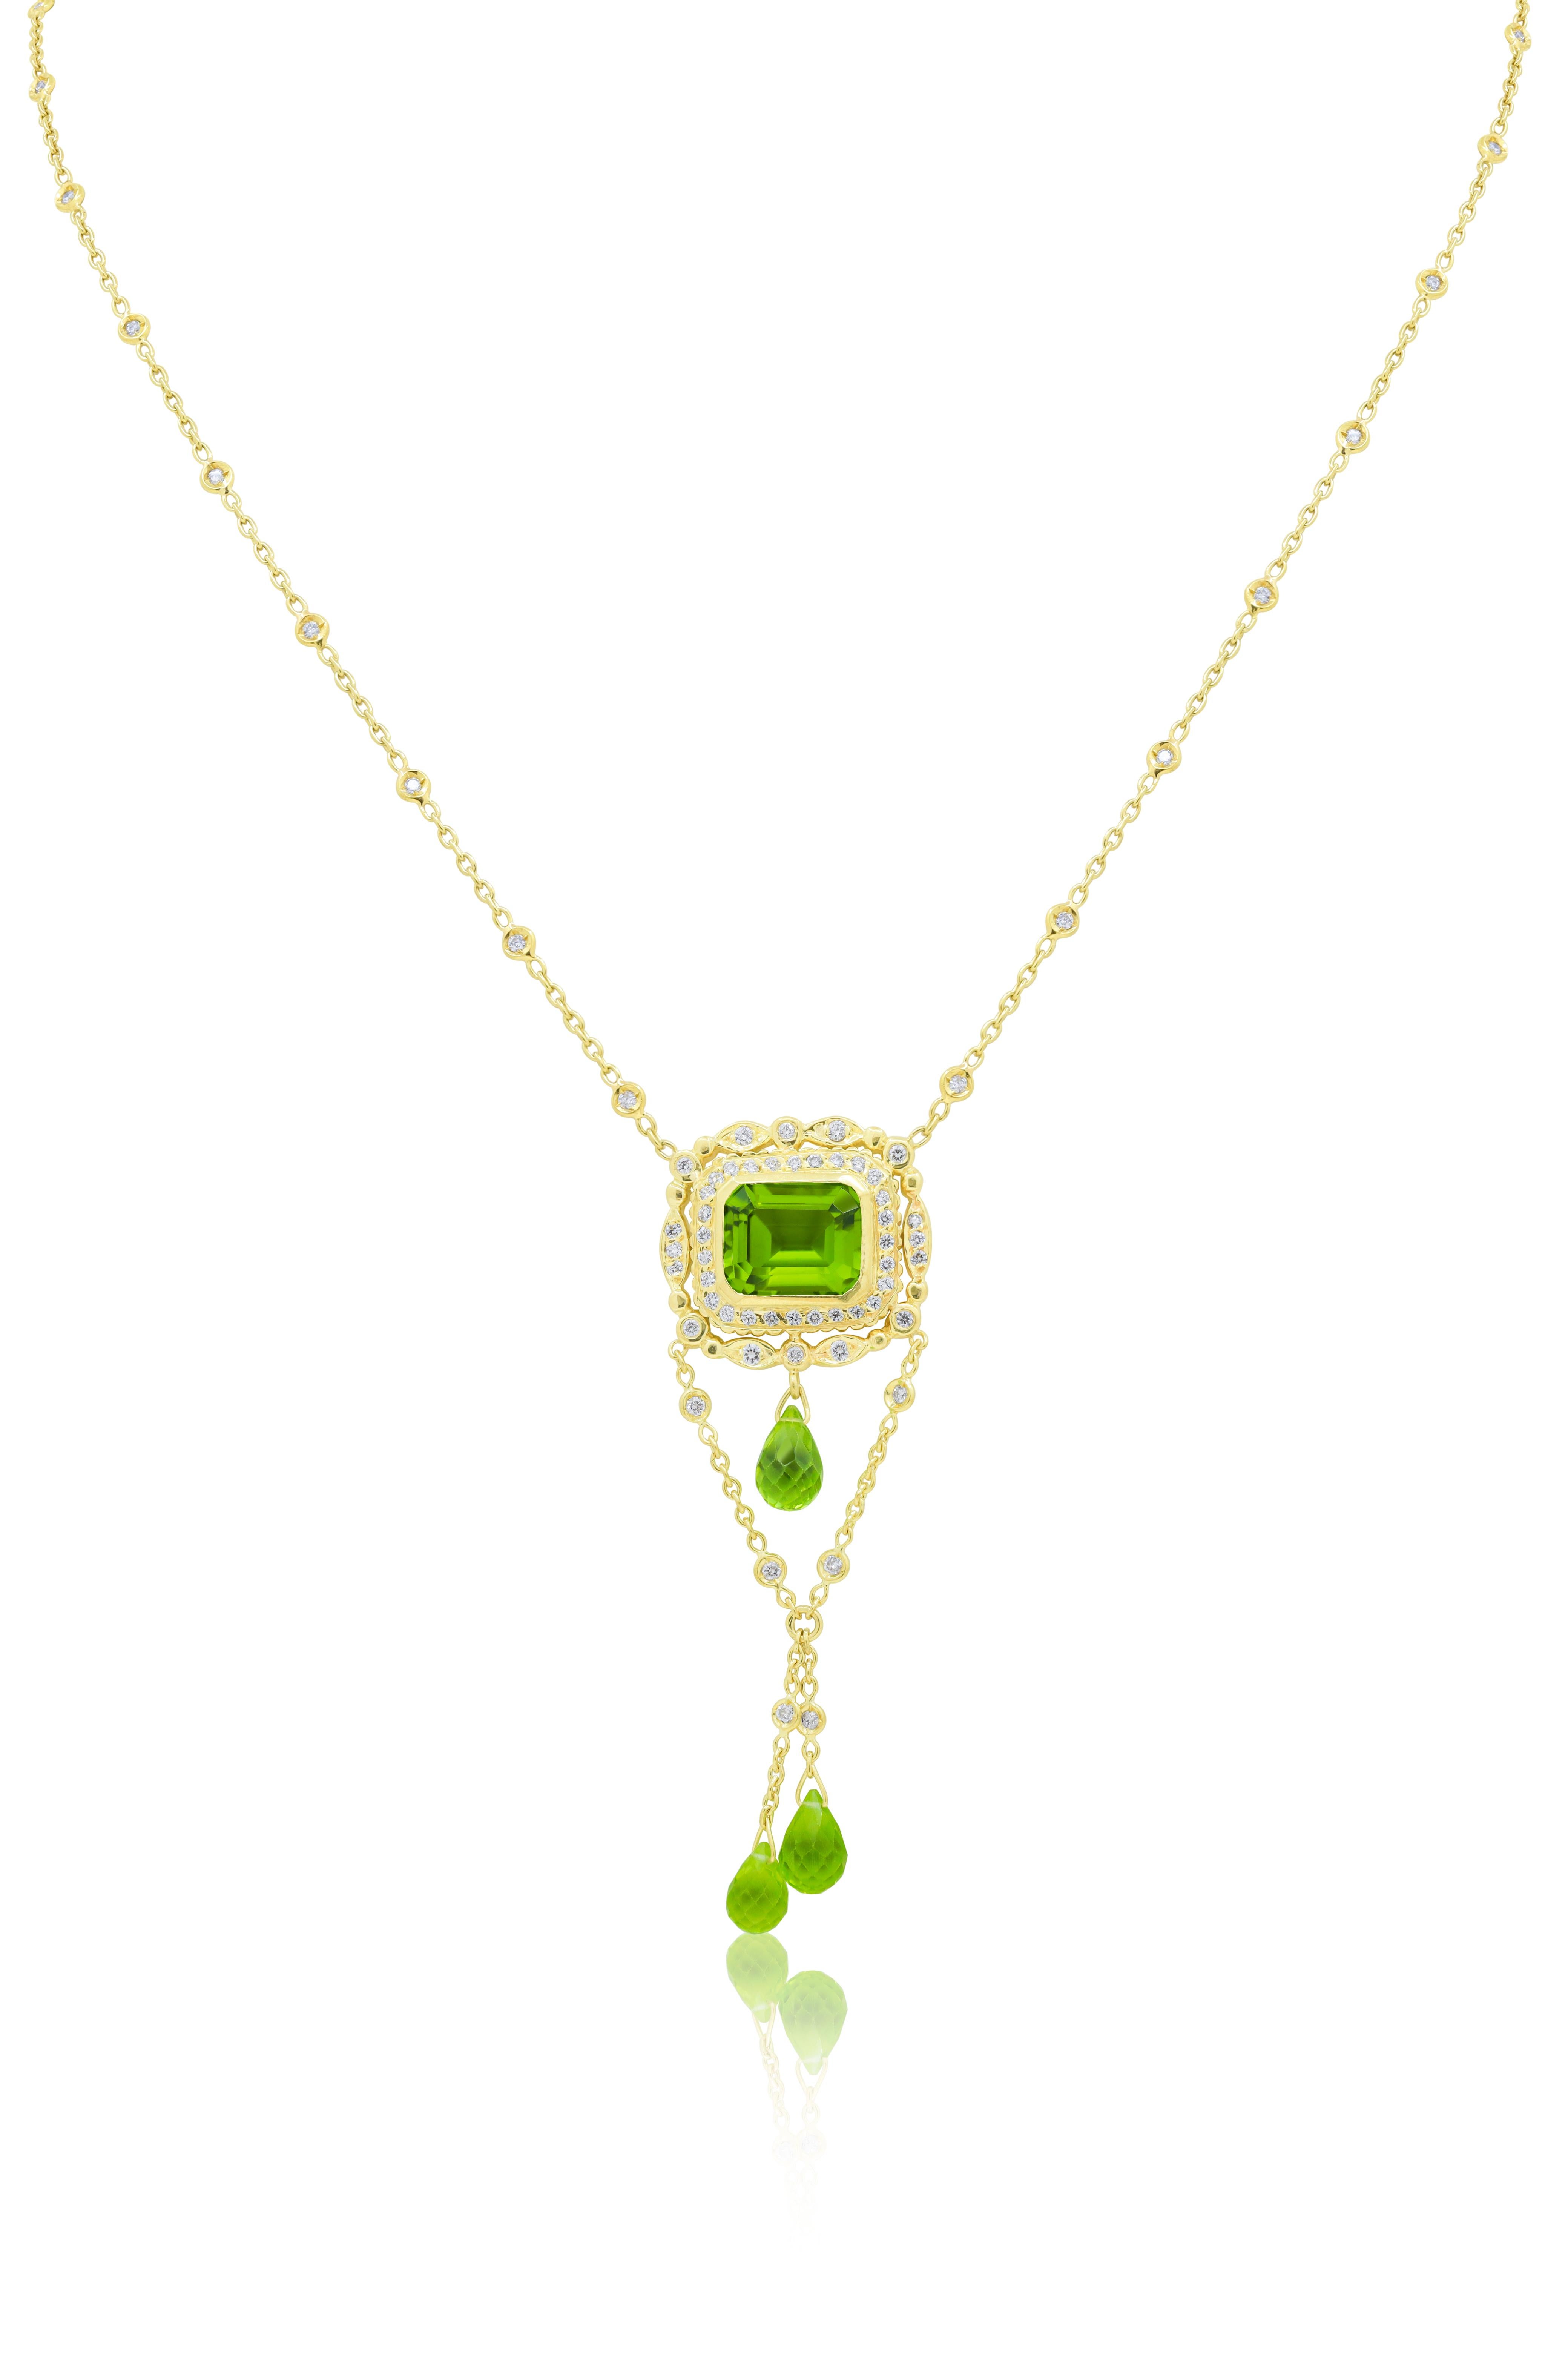 Emerald Cut Diana M. 18kt yellow gold diamond pendant with emerald cut peridot 8.00ct  For Sale